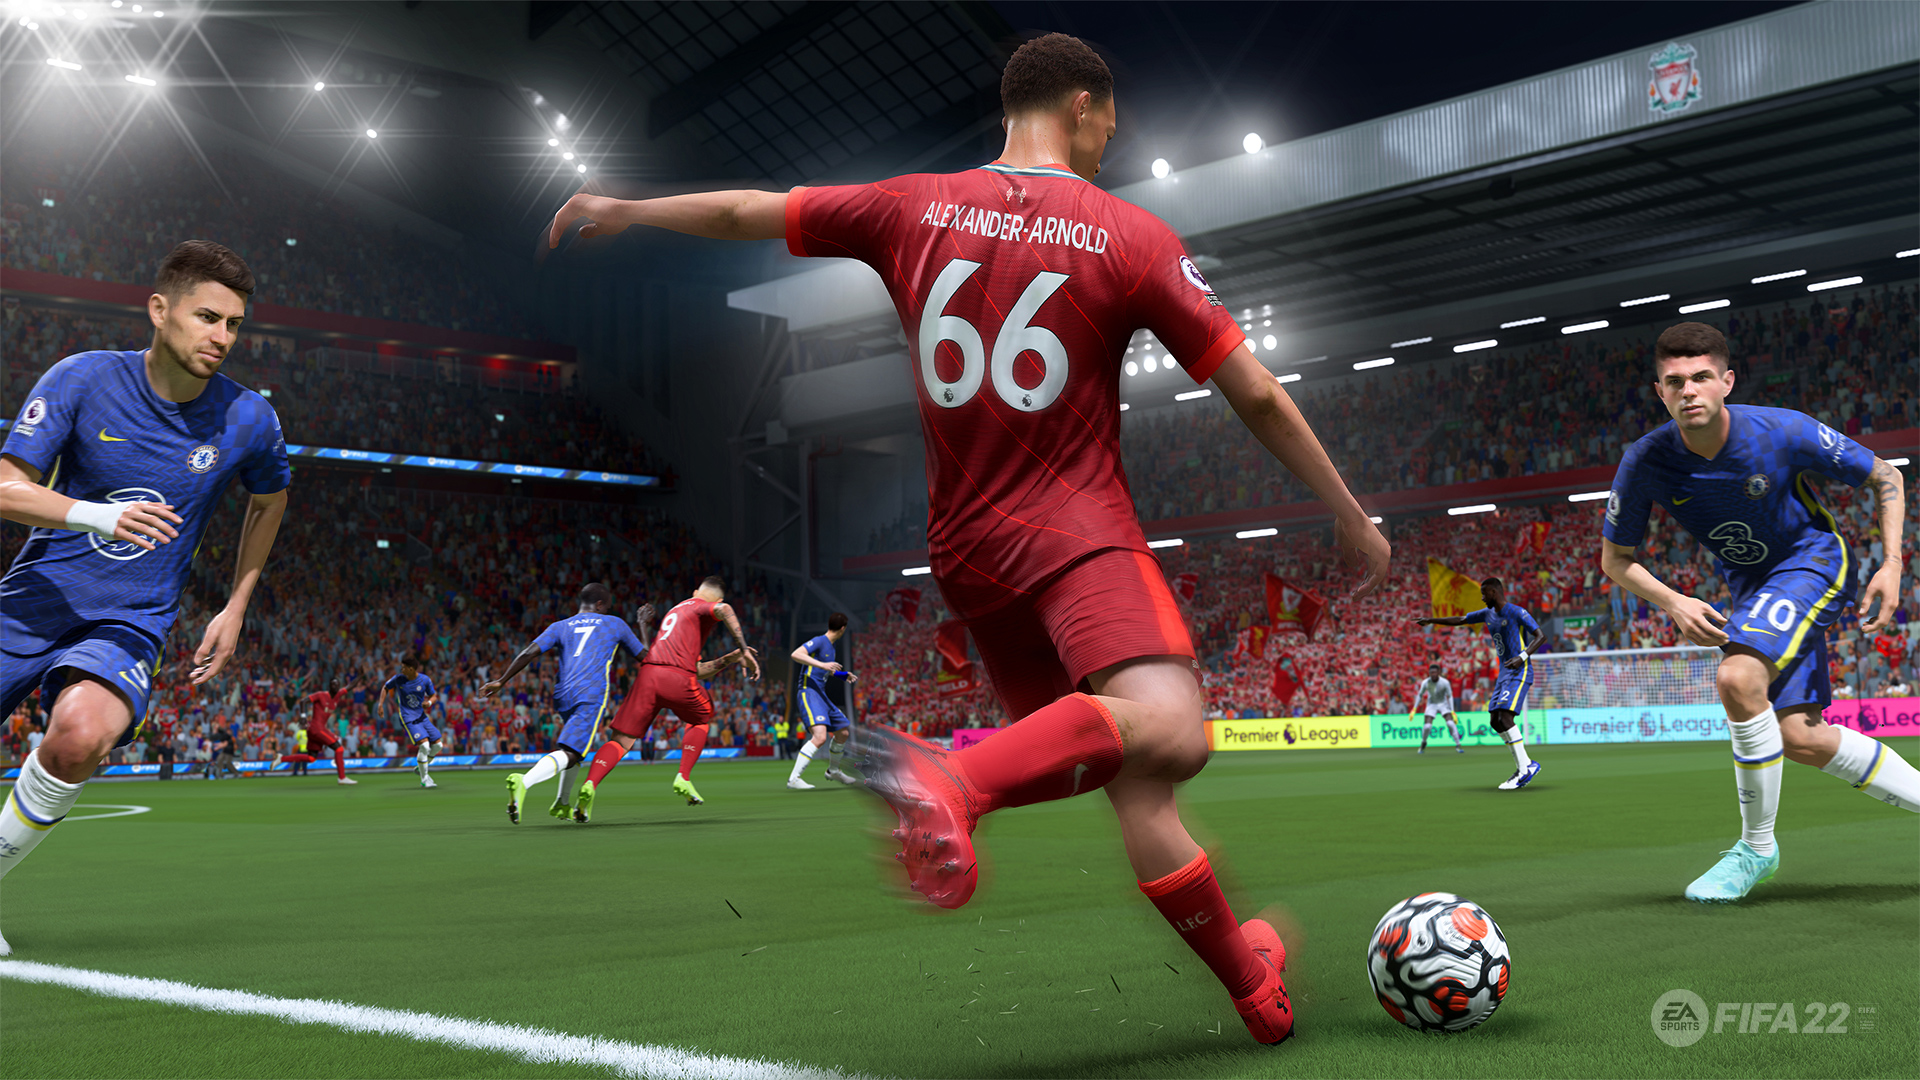 A screenshot from FIFA 22